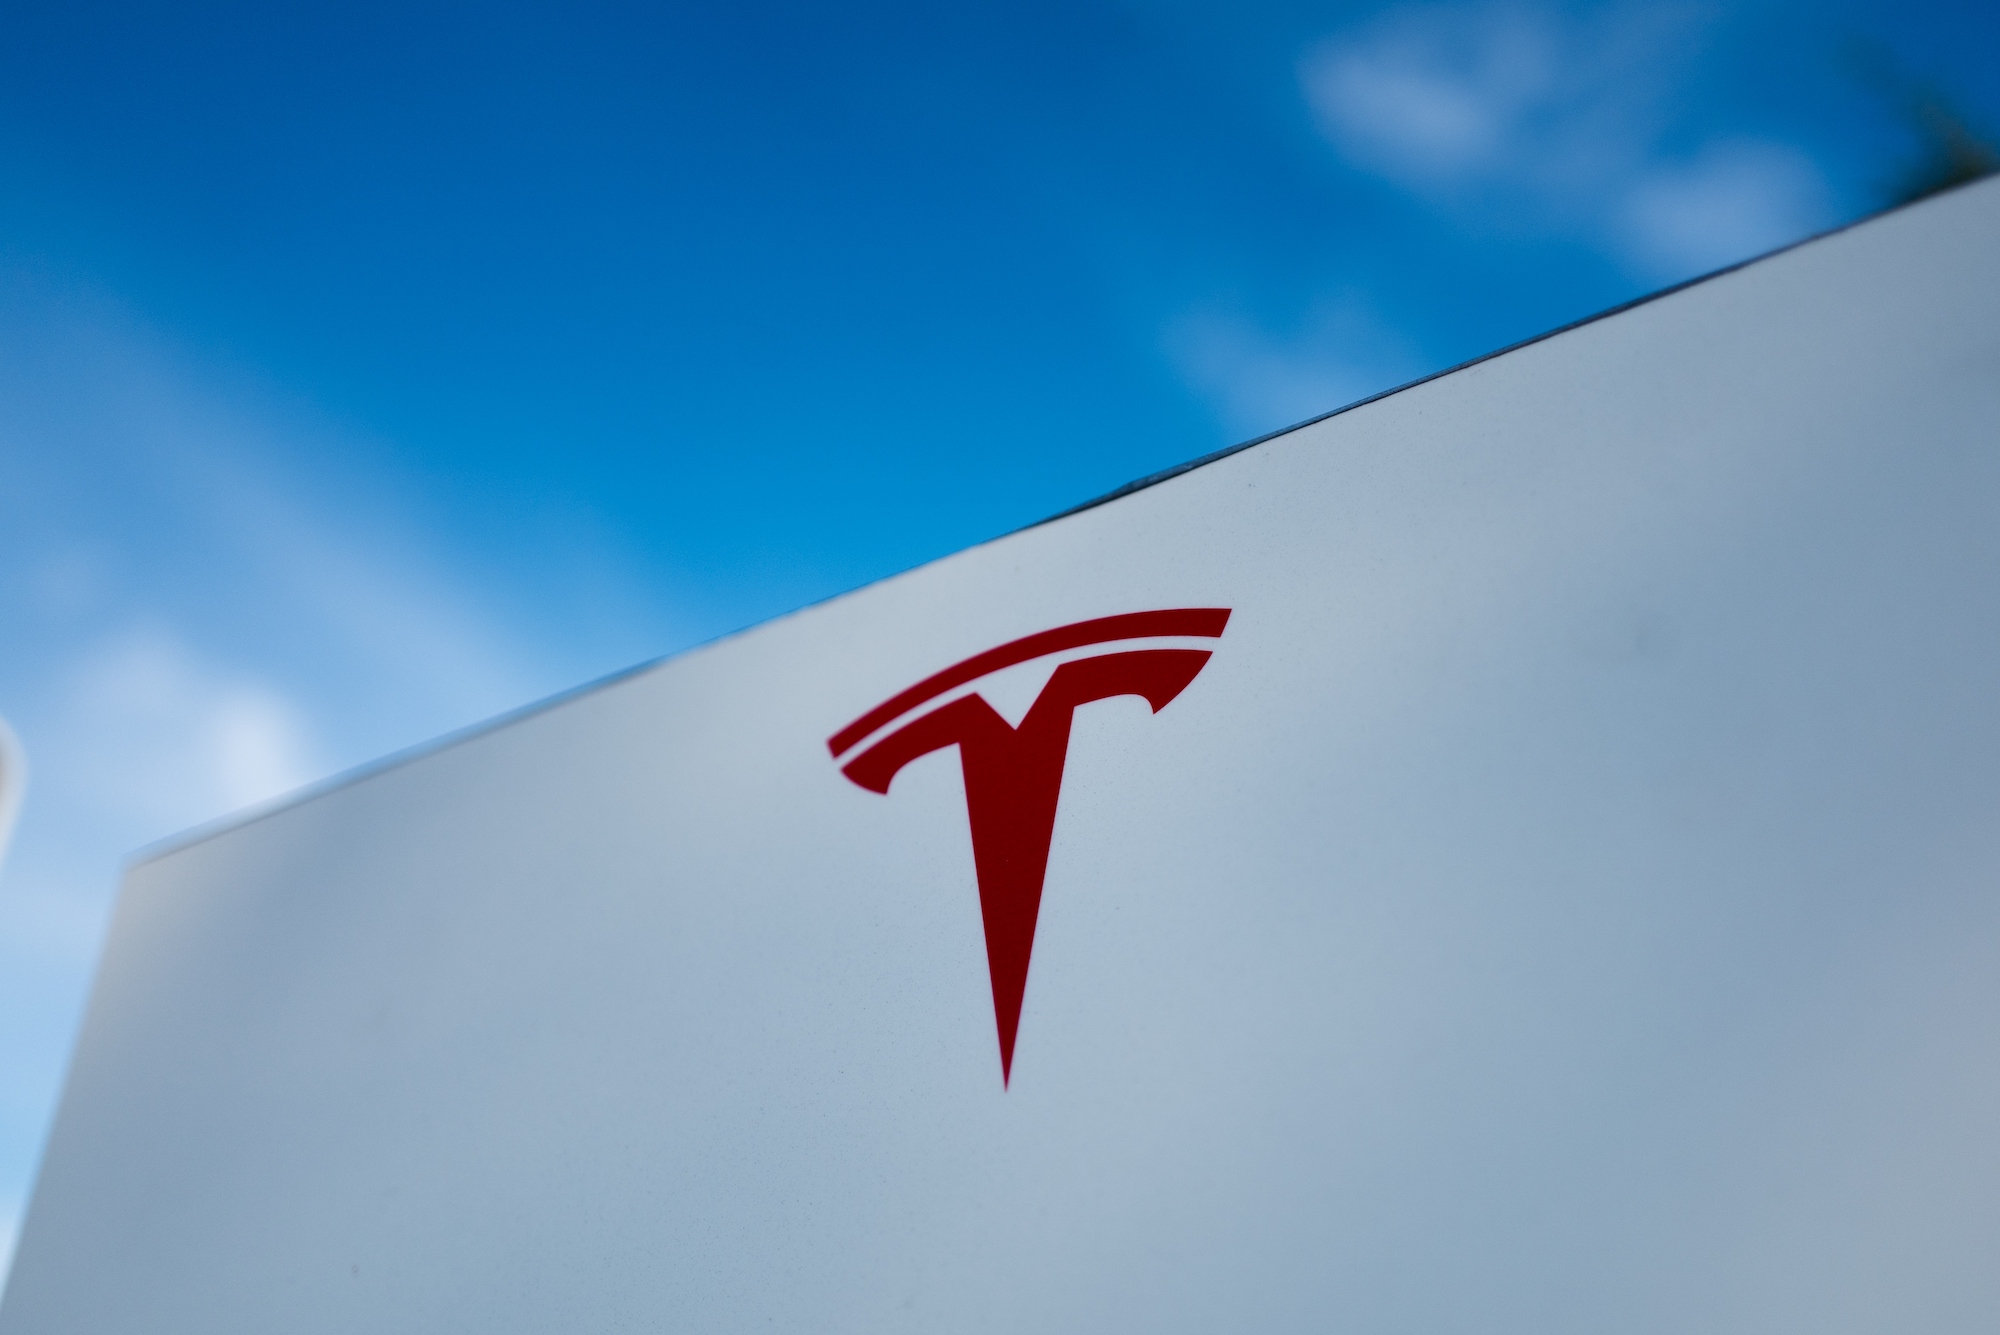 Close-up of Tesla Motors logo against a bright blue sky in Pleasanton, California, July 23, 2018.